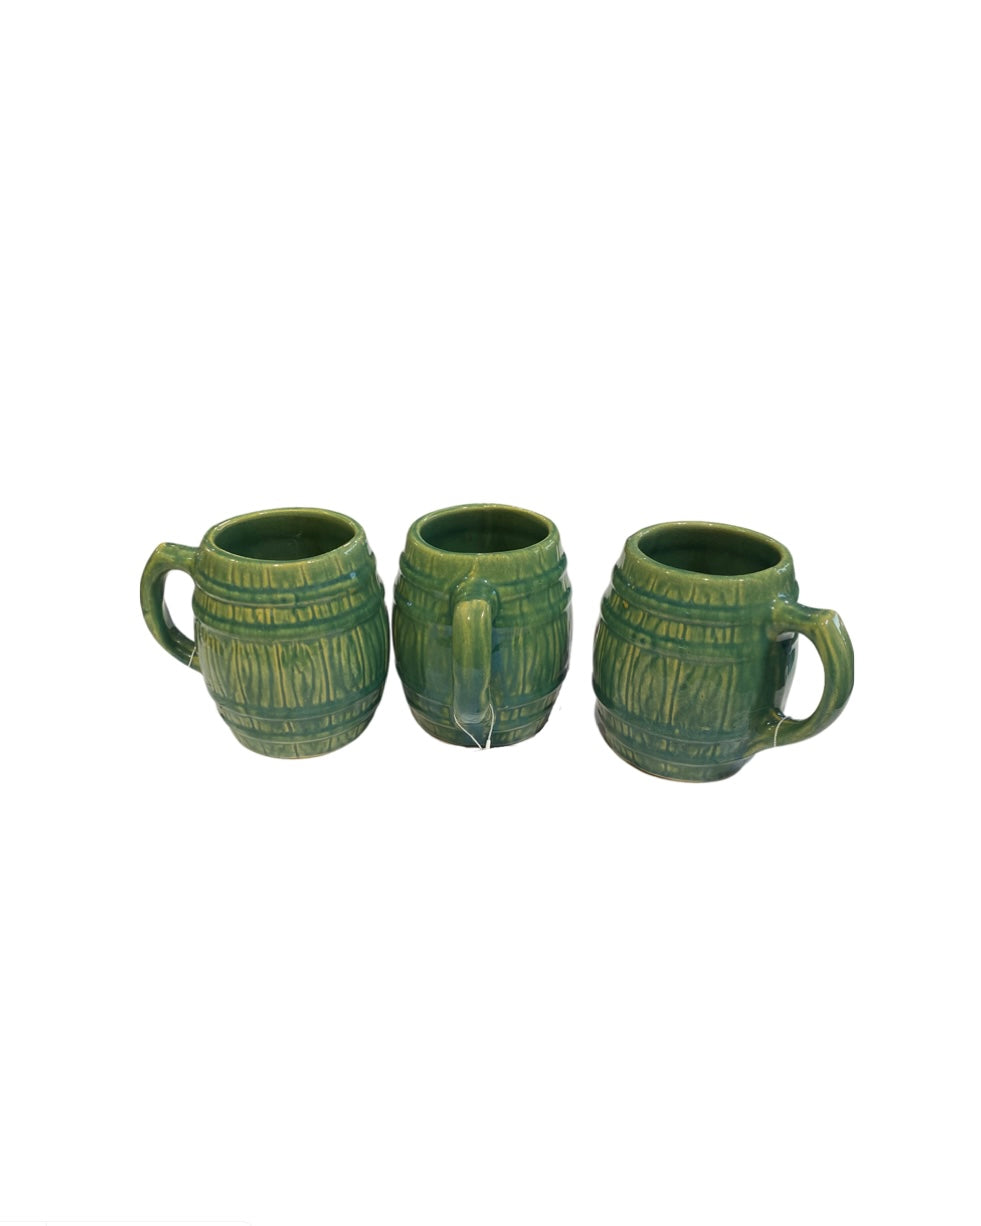 1929 McCoy Barrel Mug, Green